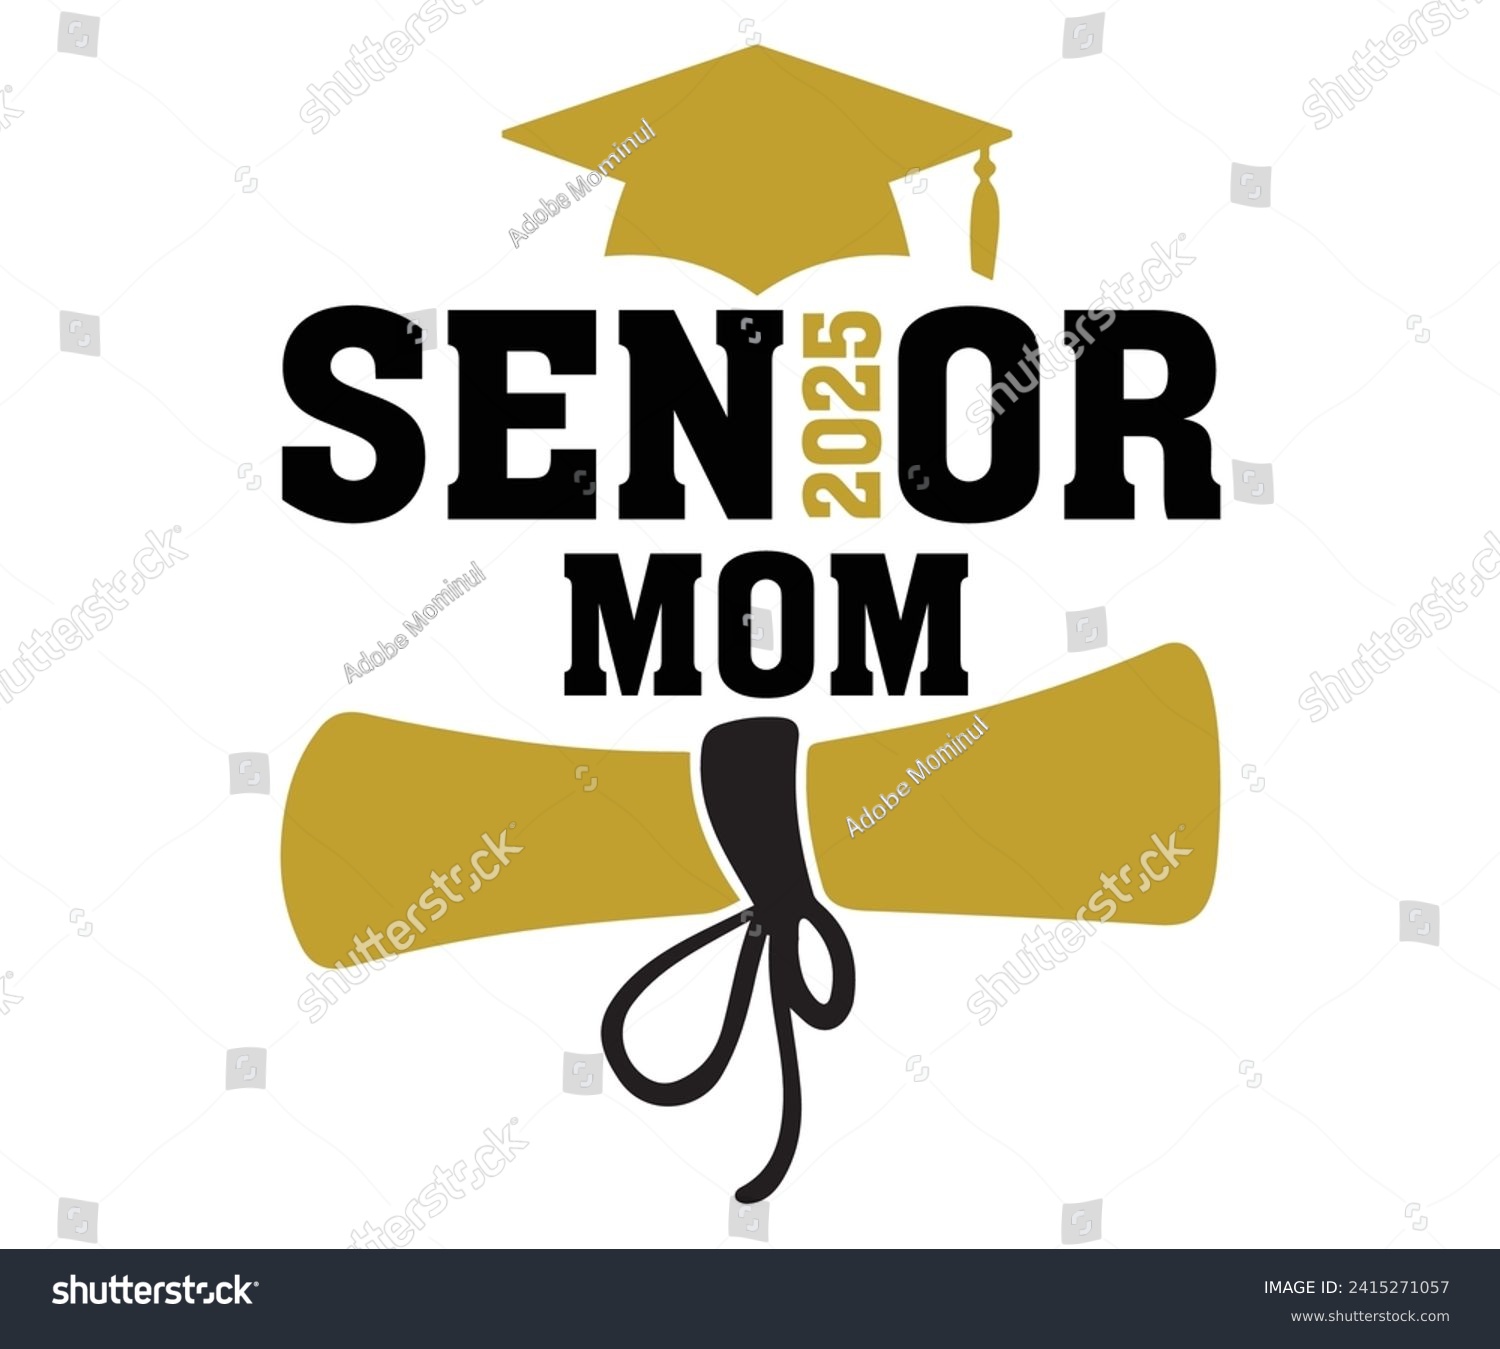 SVG of Senior Mom Svg,Graduation Svg,Senior Svg,Graduate T shirt,Graduation cap,Graduation 2024 Shirt,Family Graduation Svg,Pre-K Grad Shirt,Graduation Qoutes,Graduation Gift Shirt,Cut File,Groovy, svg